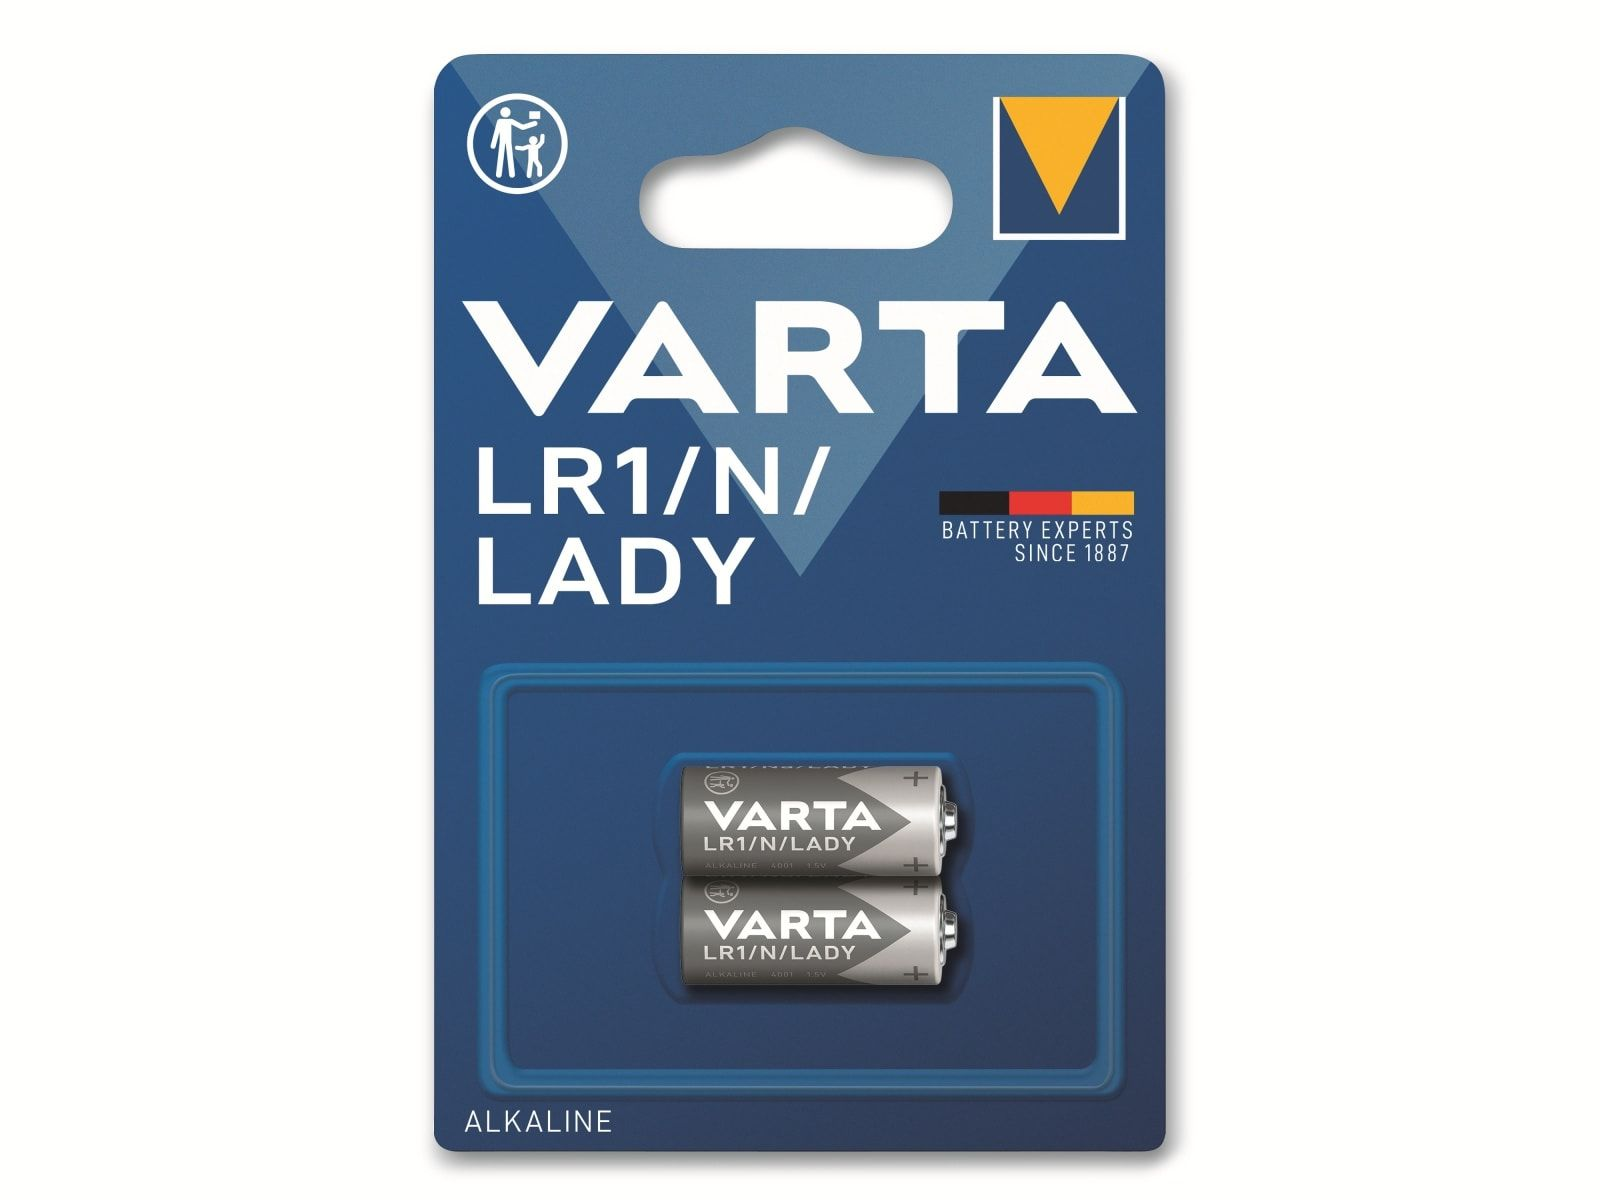 VARTA Varta Cons.Varta Batterie Electronics Batterie 4001 Bli.2 Alkaline LR1/N/Lady/Al-Mn